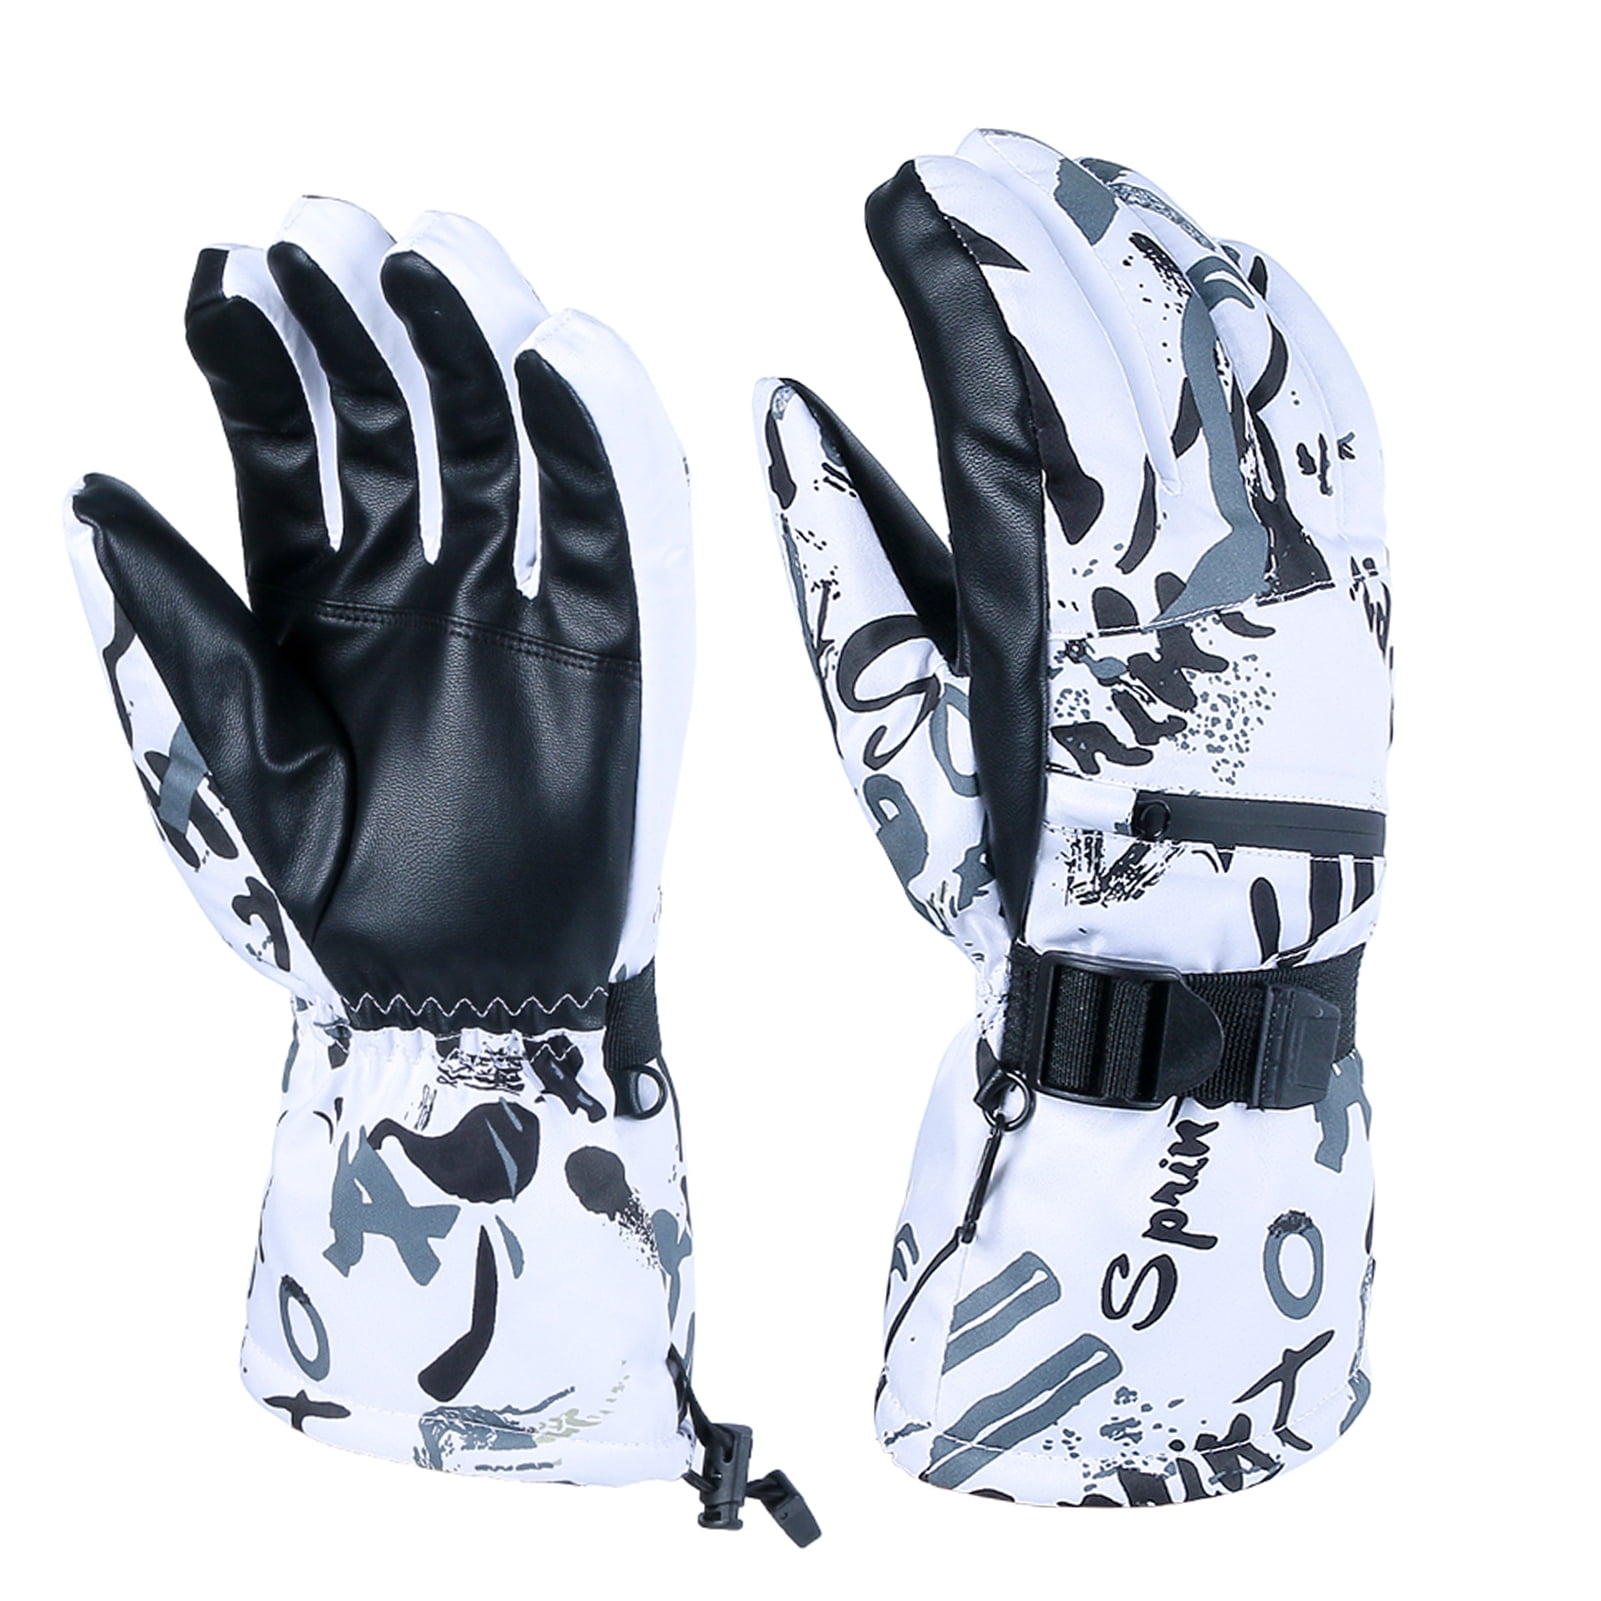 Unisex Winter Gloves Waterproof Thermal Warm Touchscreen Running Bike Ski Snow 